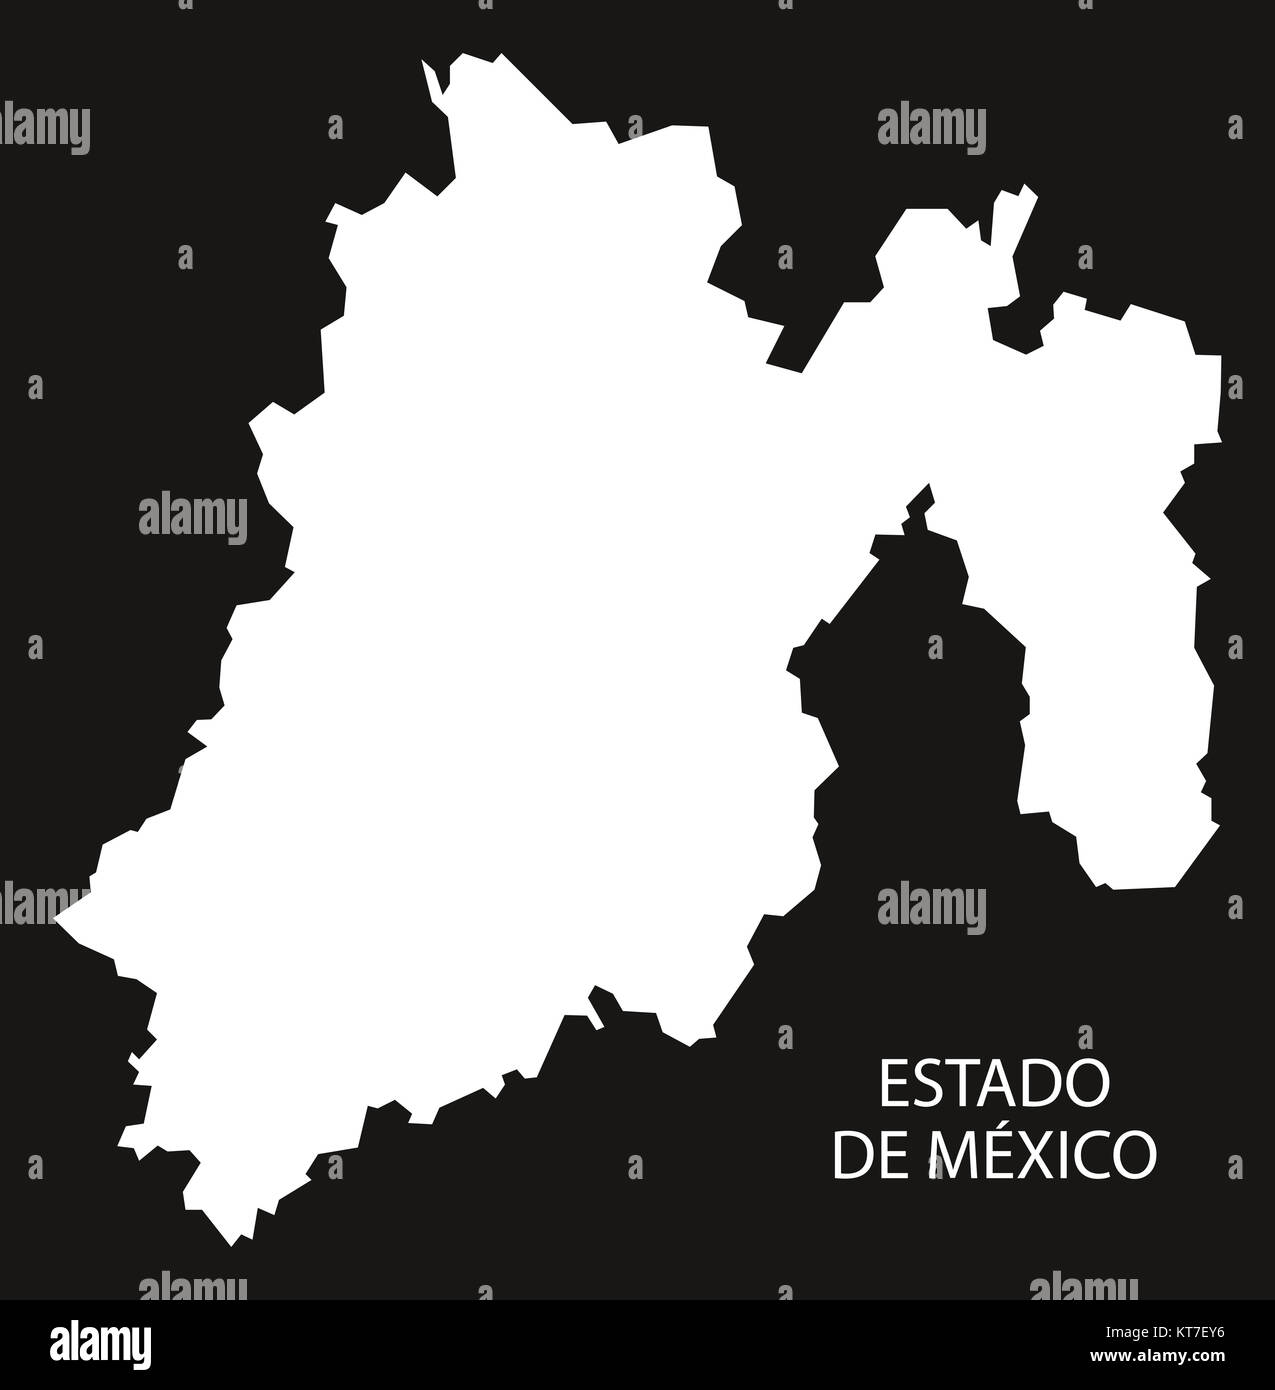 Estado De Mexico Map black inverted silhouette Stock Photo